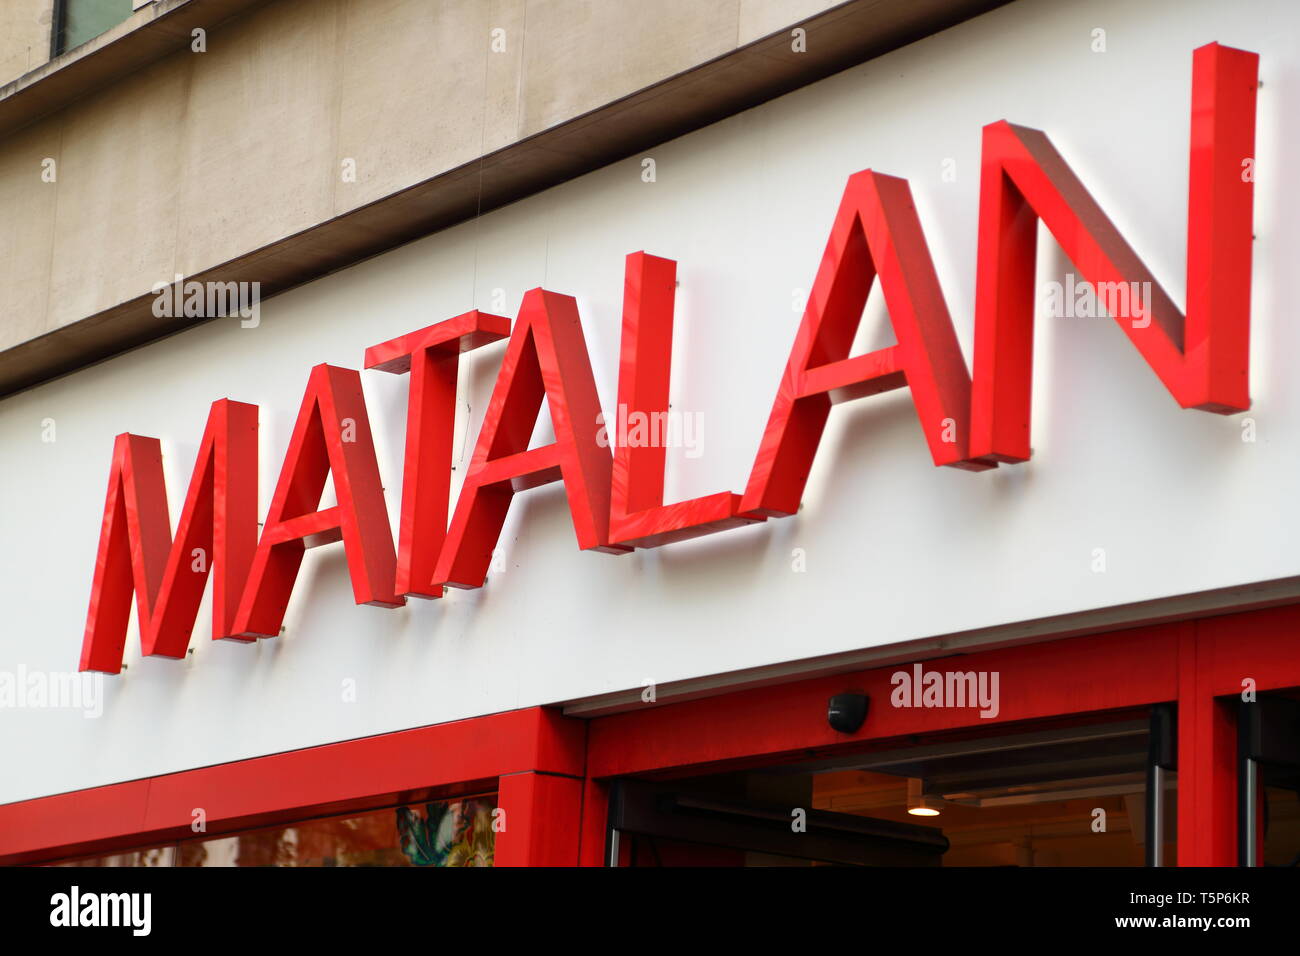 Matalan sign above a Matalan shop in Oxford Street, London, UK Stock Photo